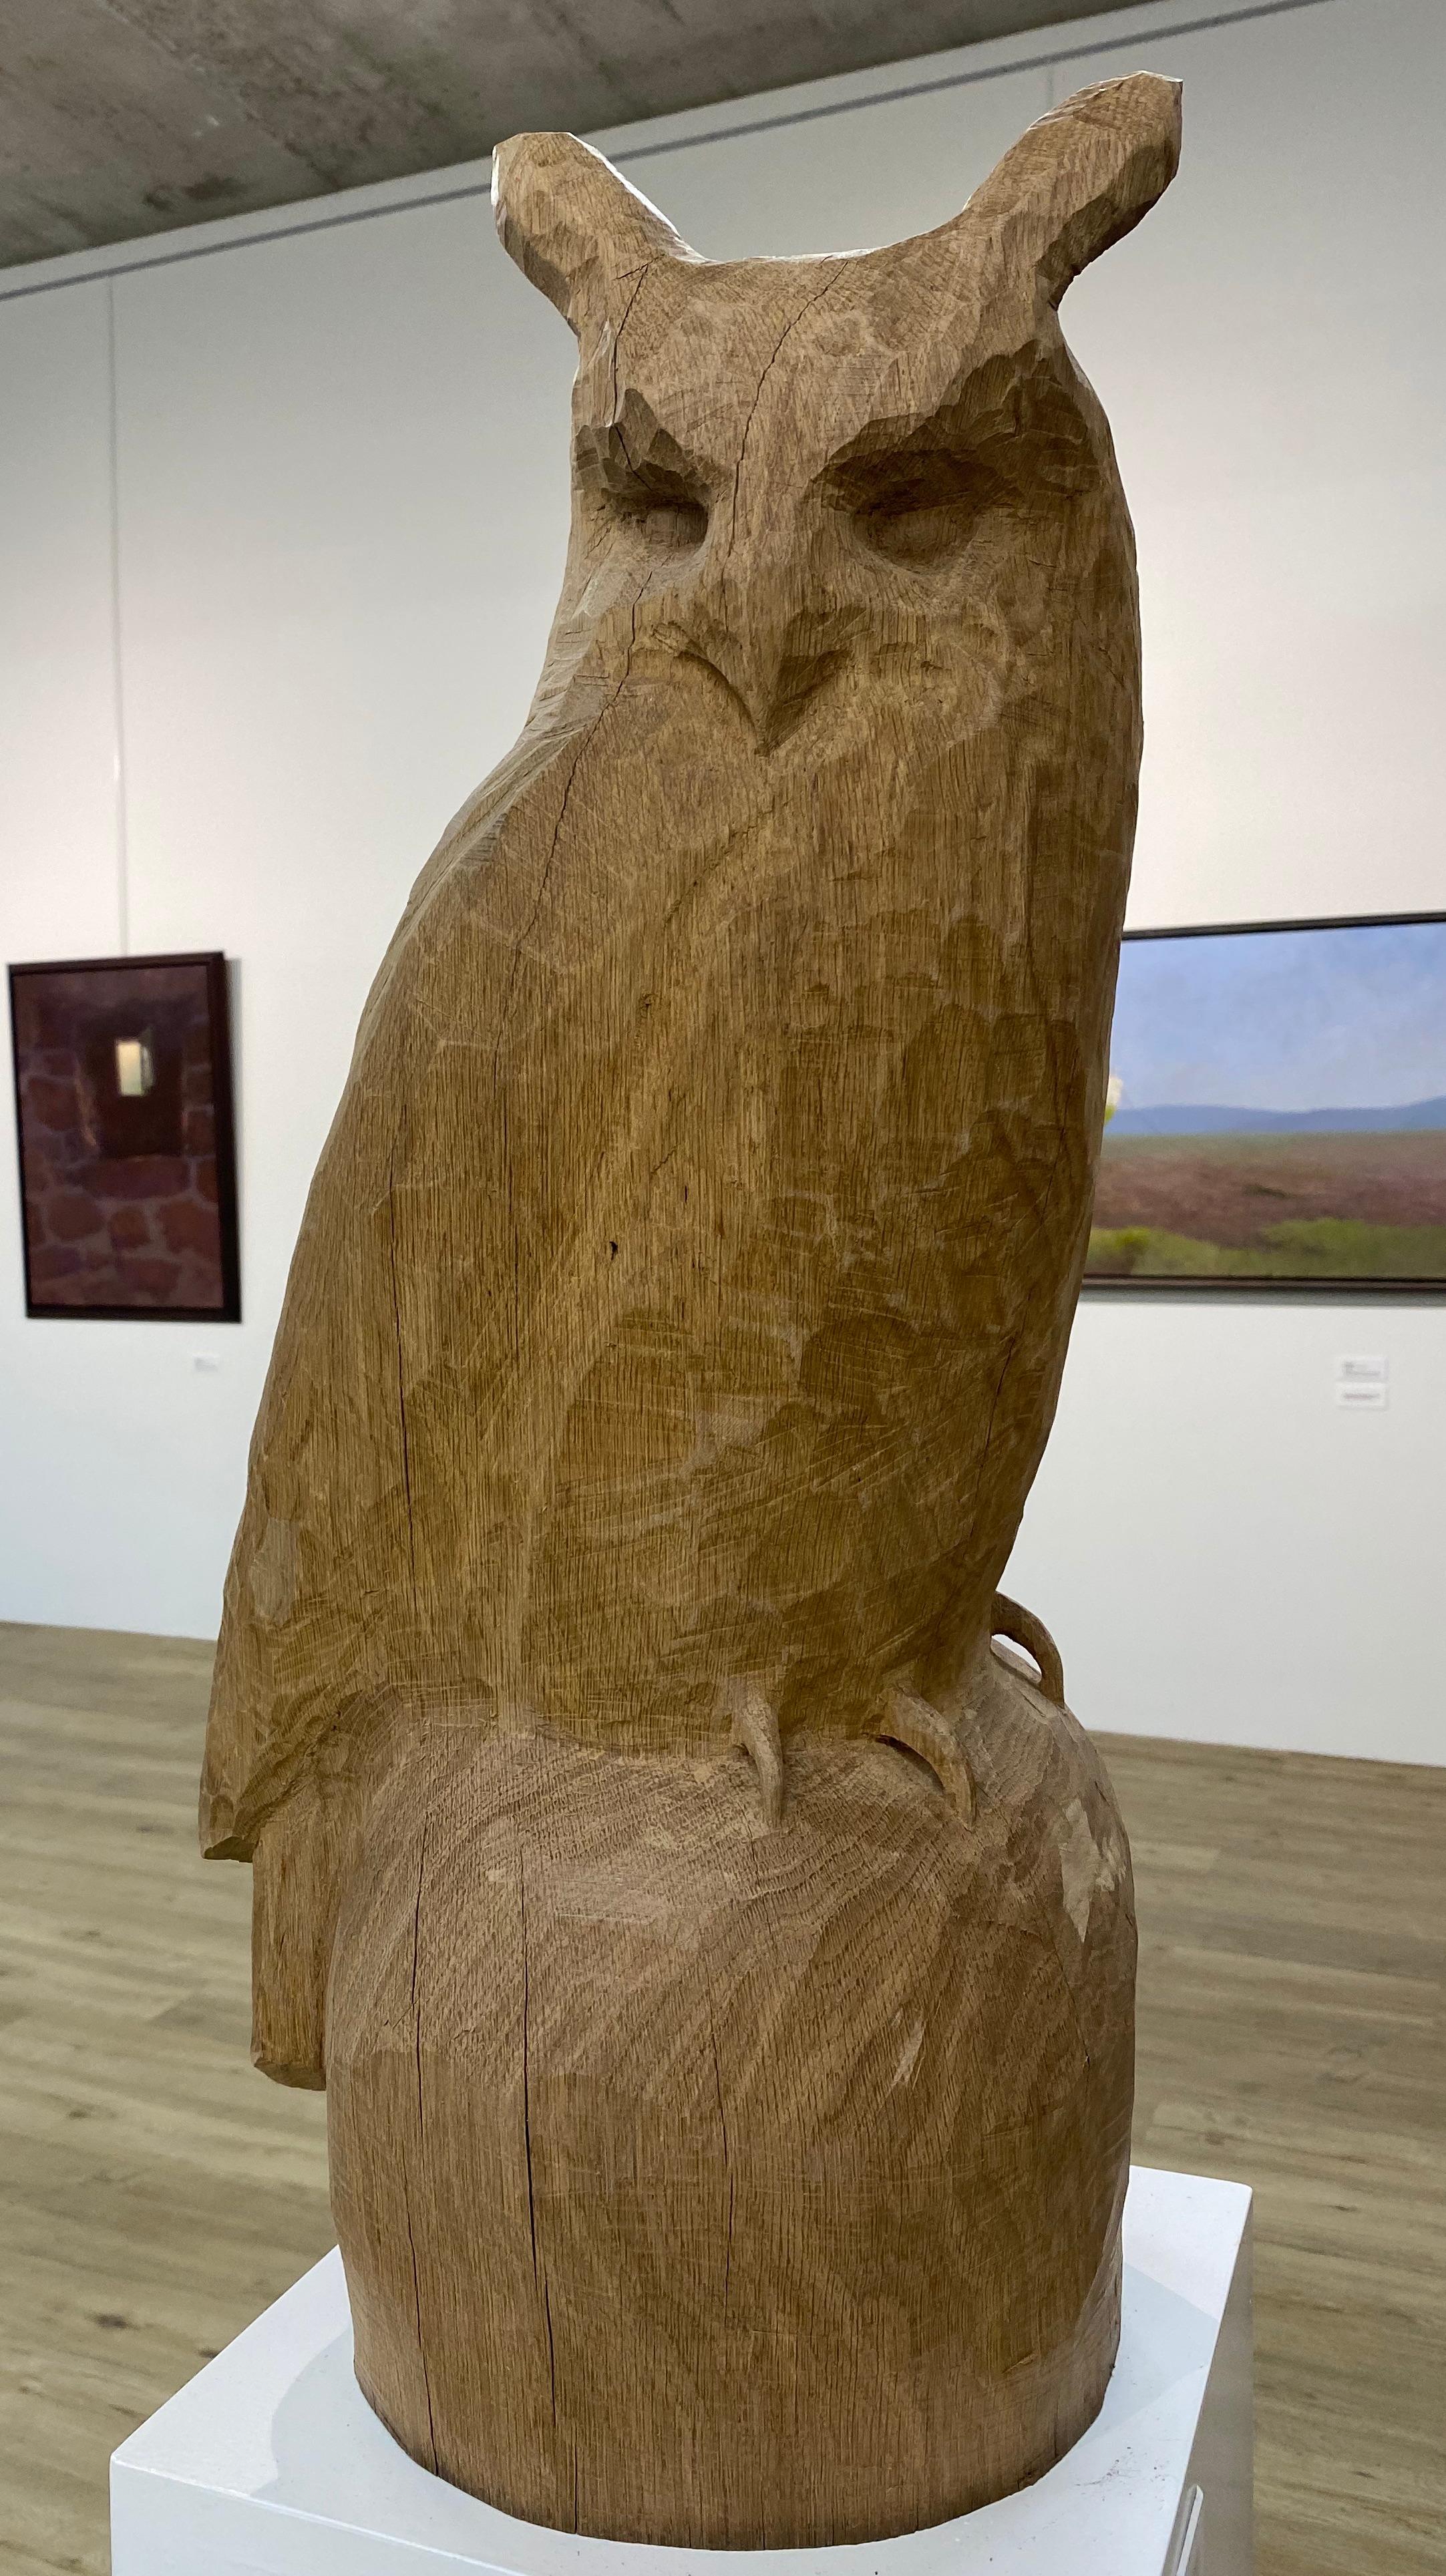 Eagle Owl - 21st Century Sculpture of an Owl made of oak